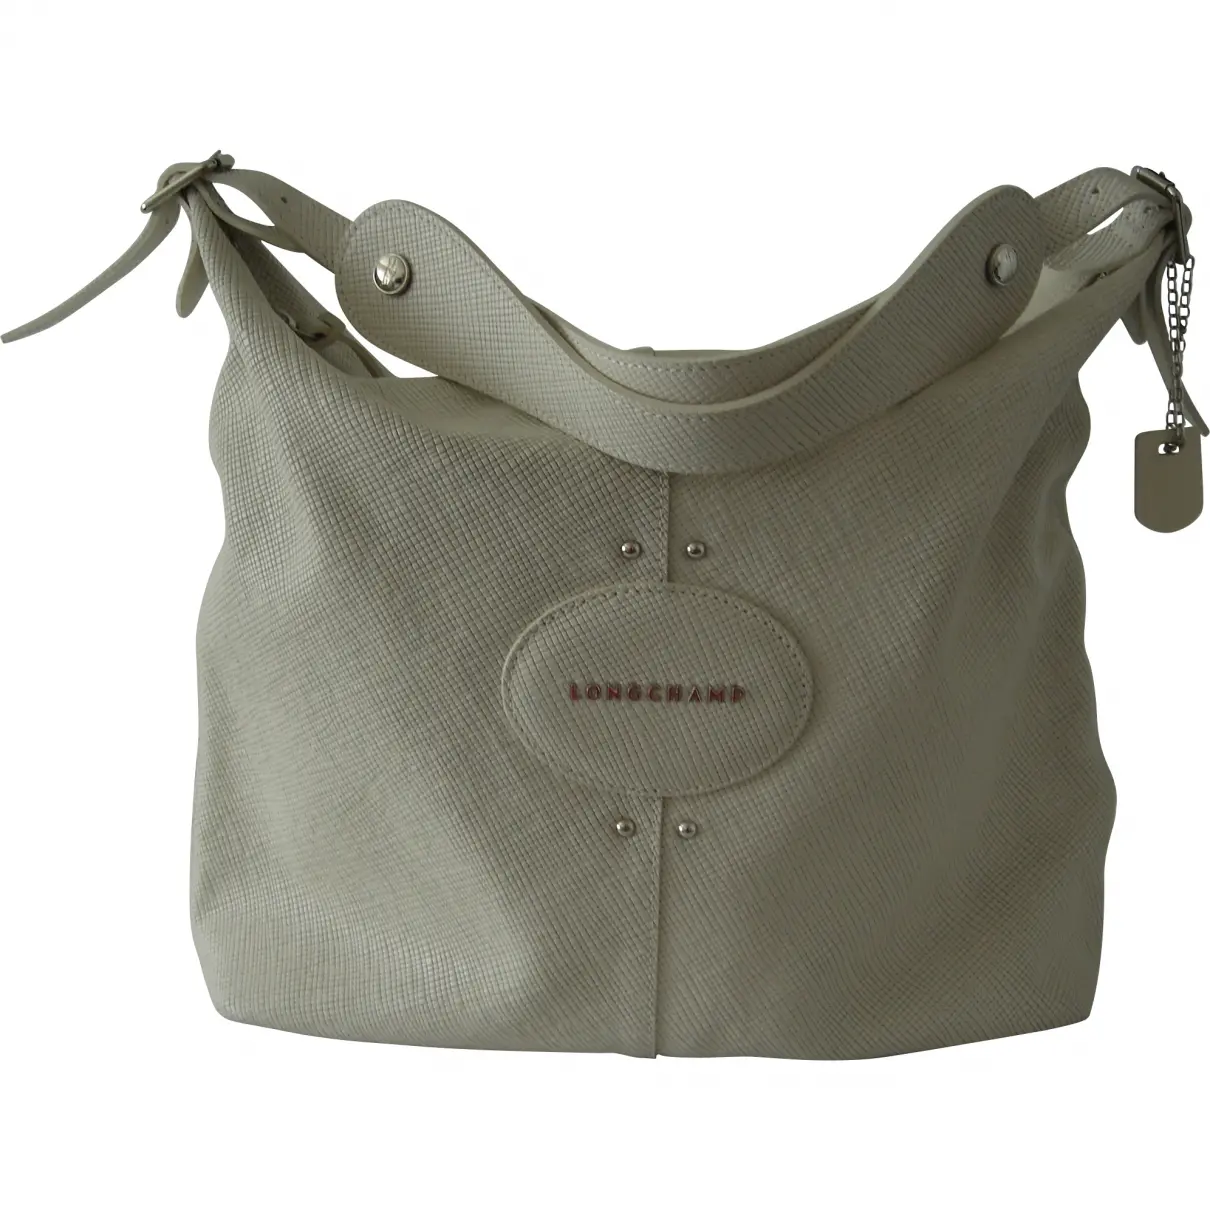 White Leather Handbag Longchamp